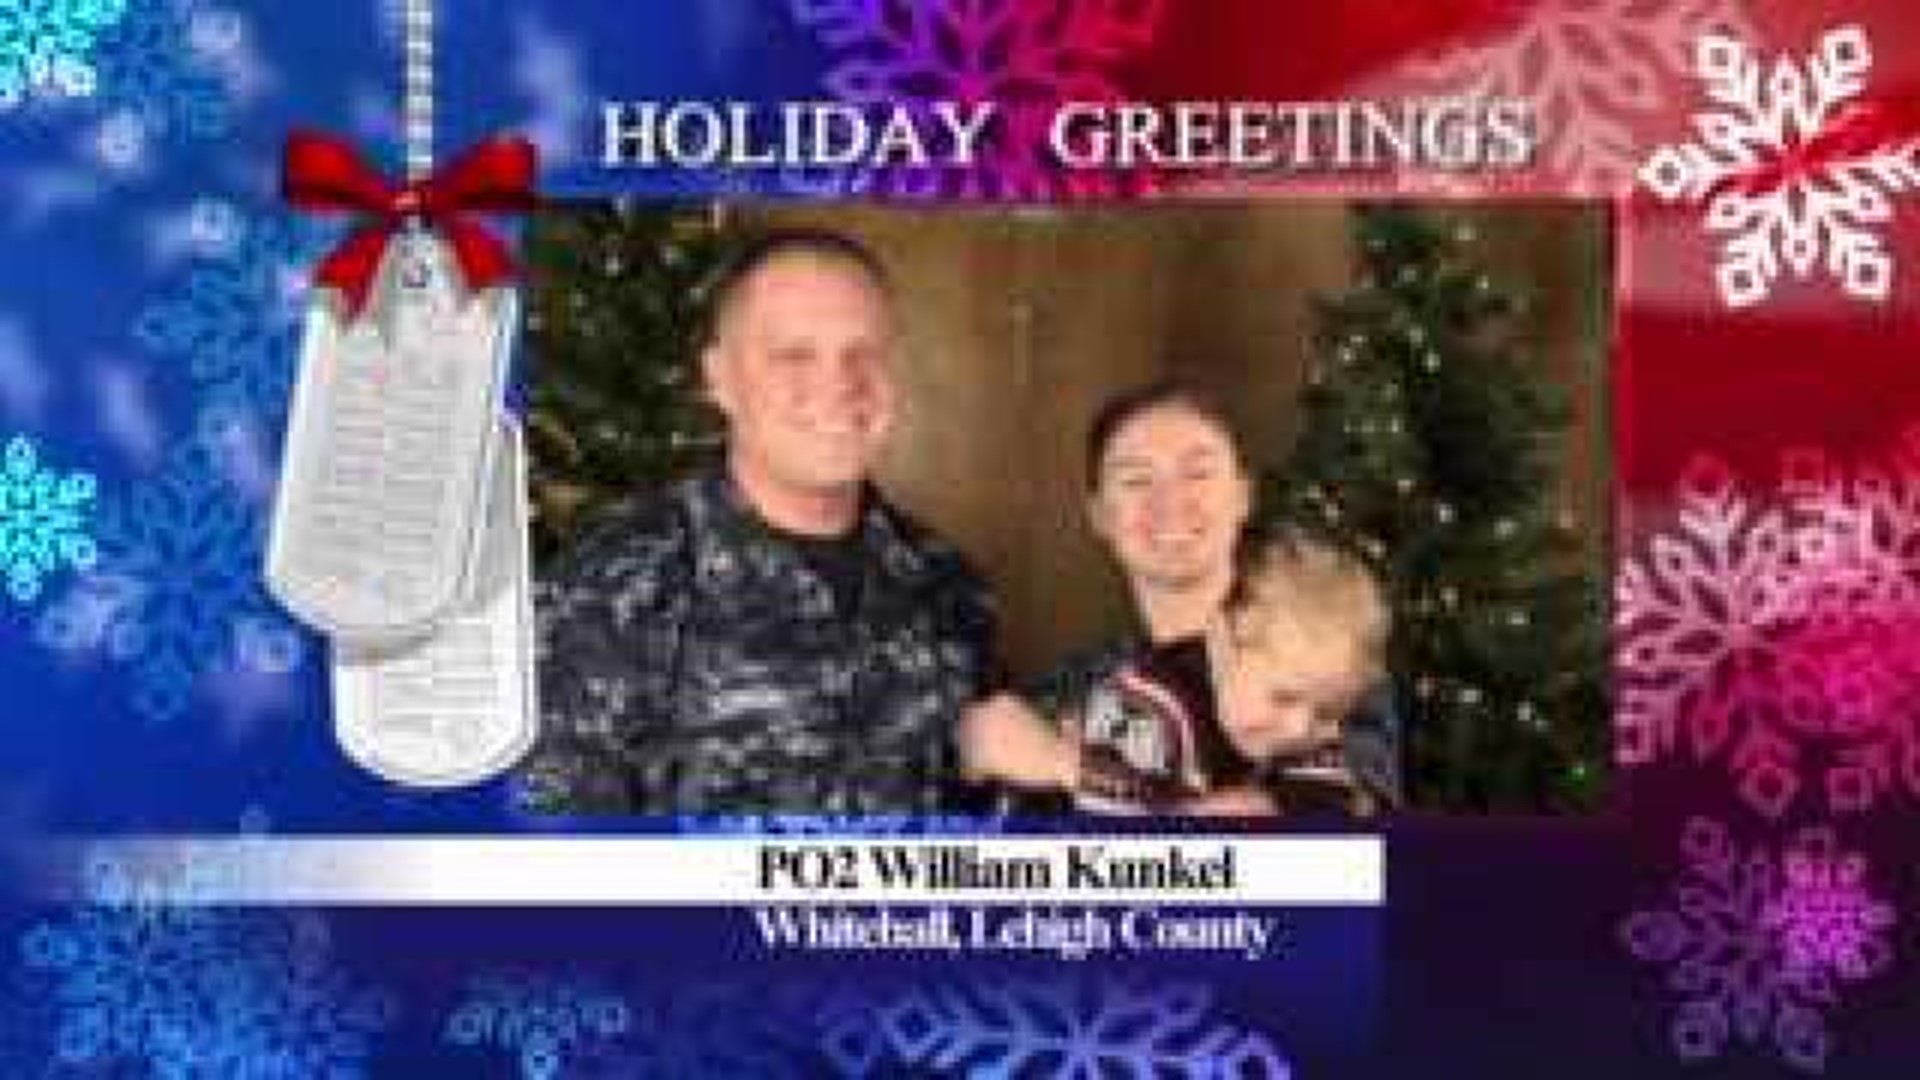 Military Greeting: PO2 William Kunkel